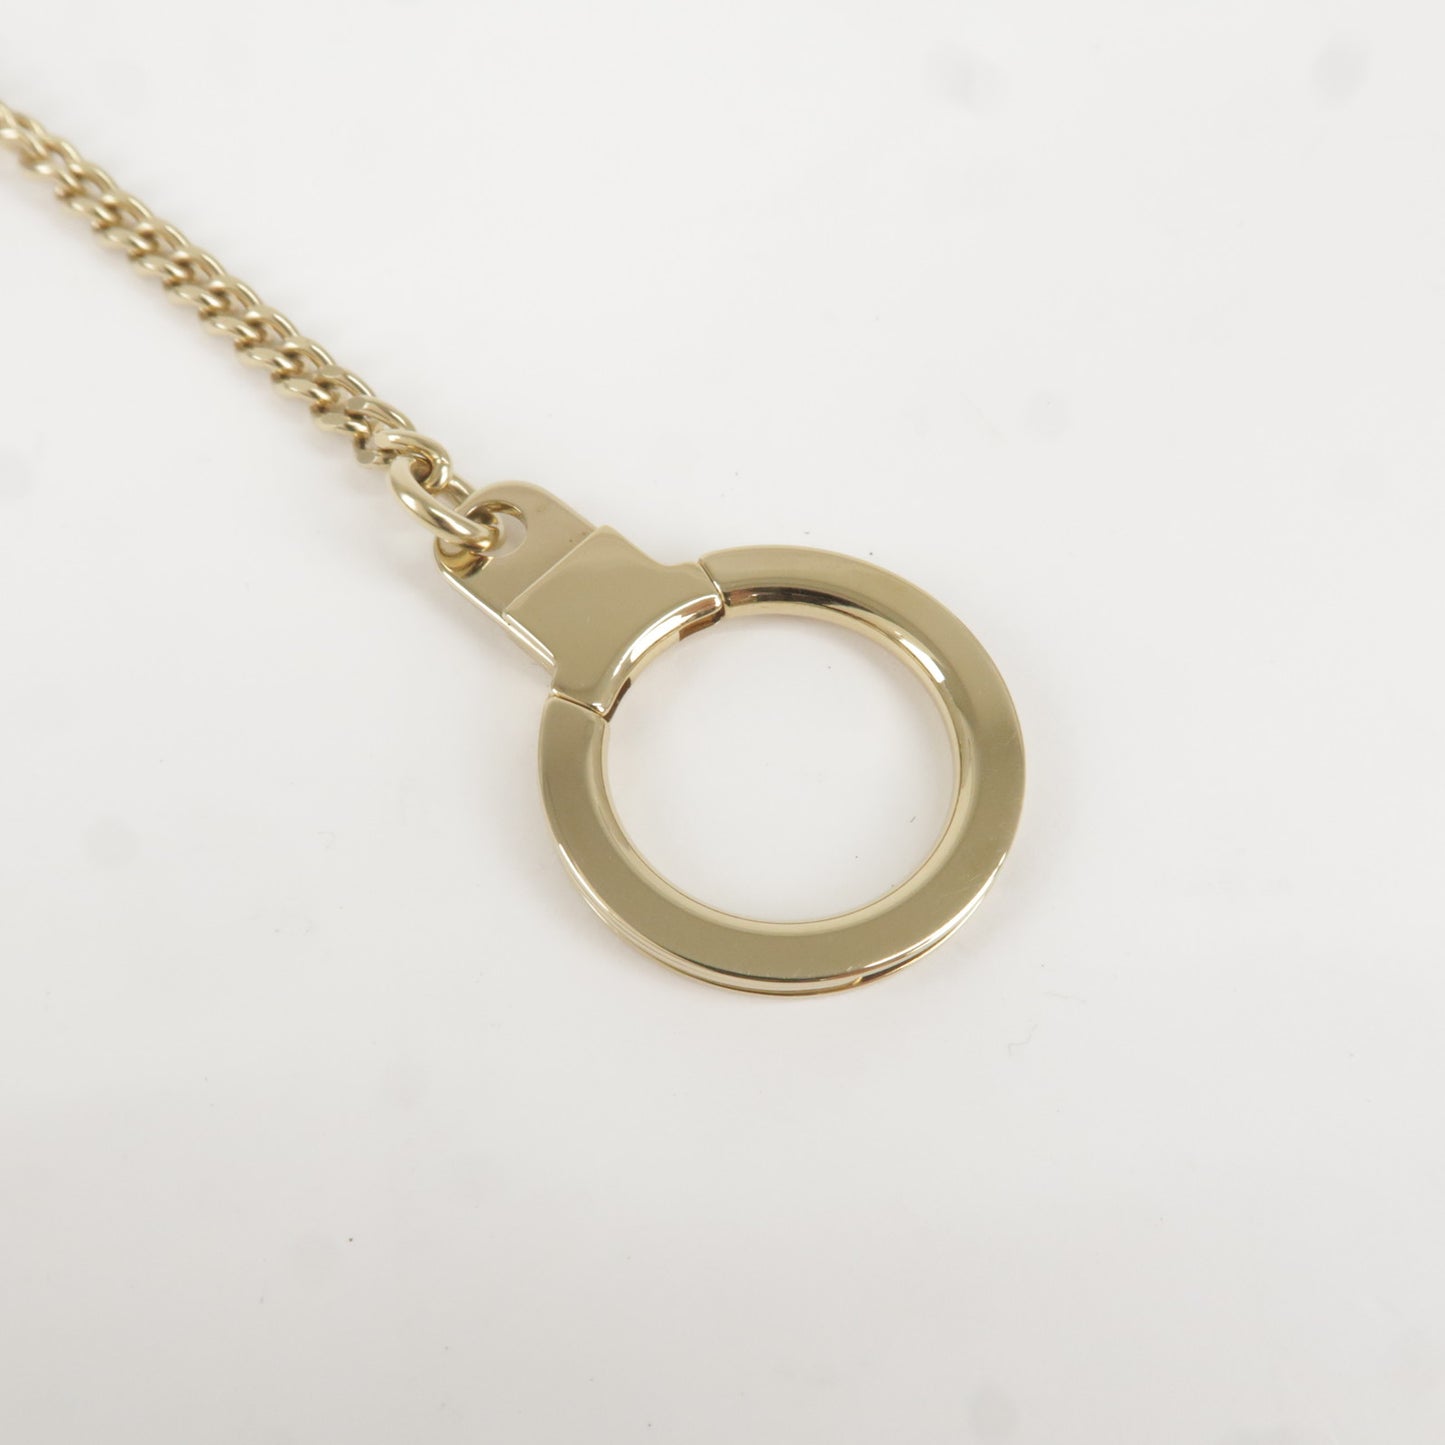 Louis-Vuitton-Chenne-Ano-Cles-Key-Chain-Key-Charm-Gold-M58021